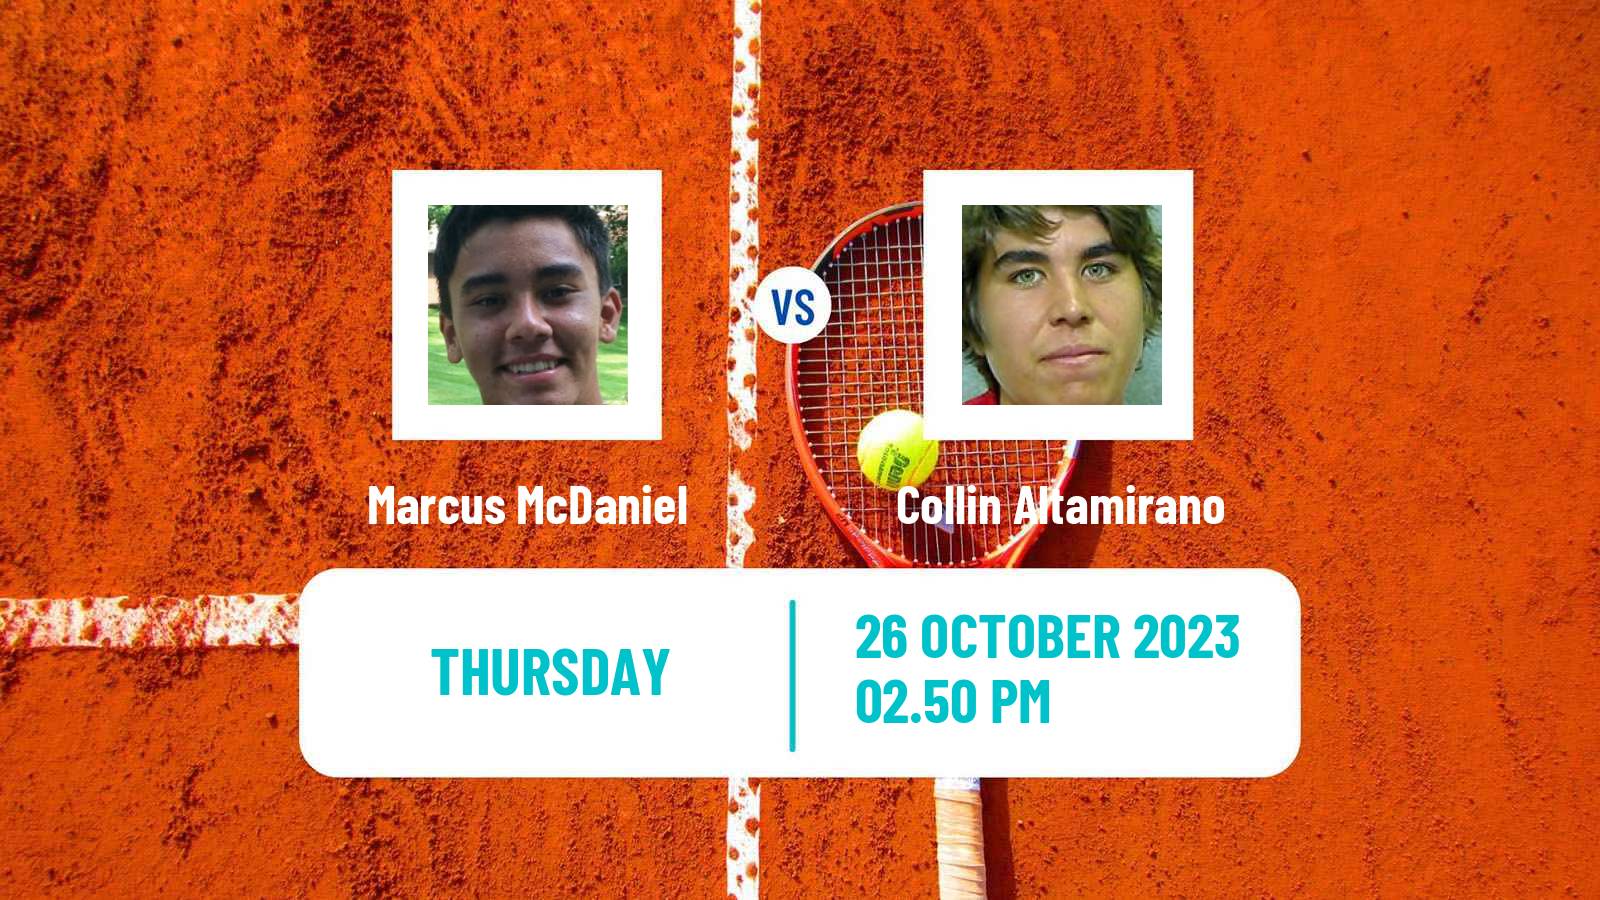 Tennis ITF M25 Harlingen Tx Men Marcus McDaniel - Collin Altamirano